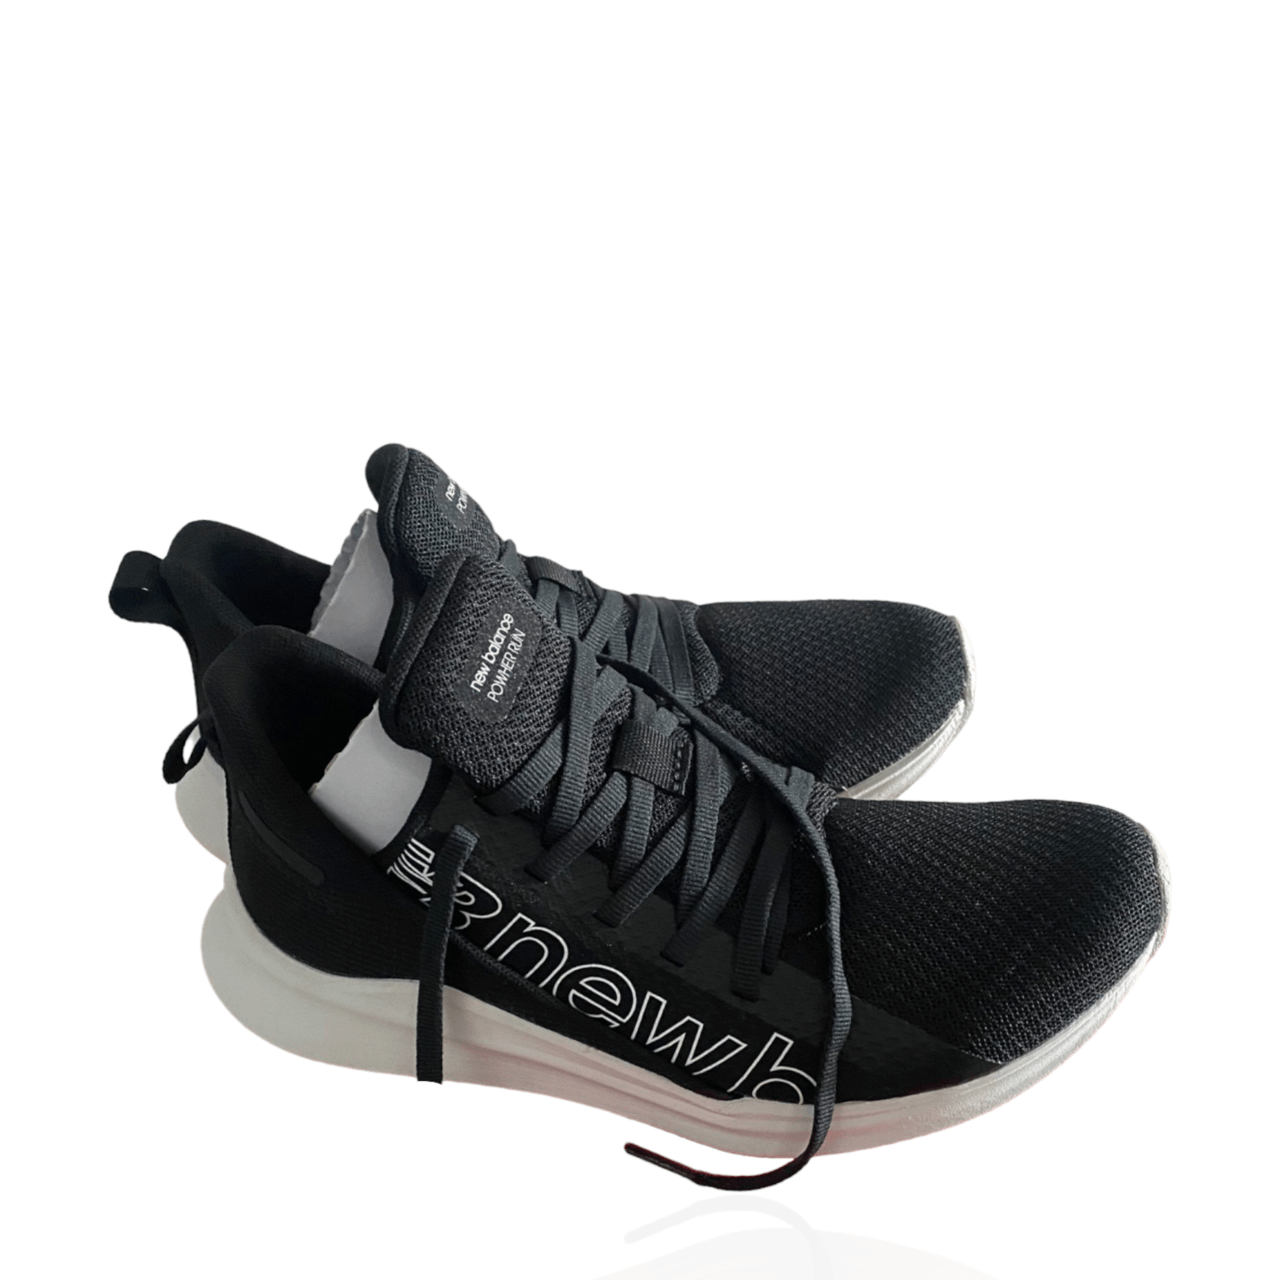 New Balance Black Shoes